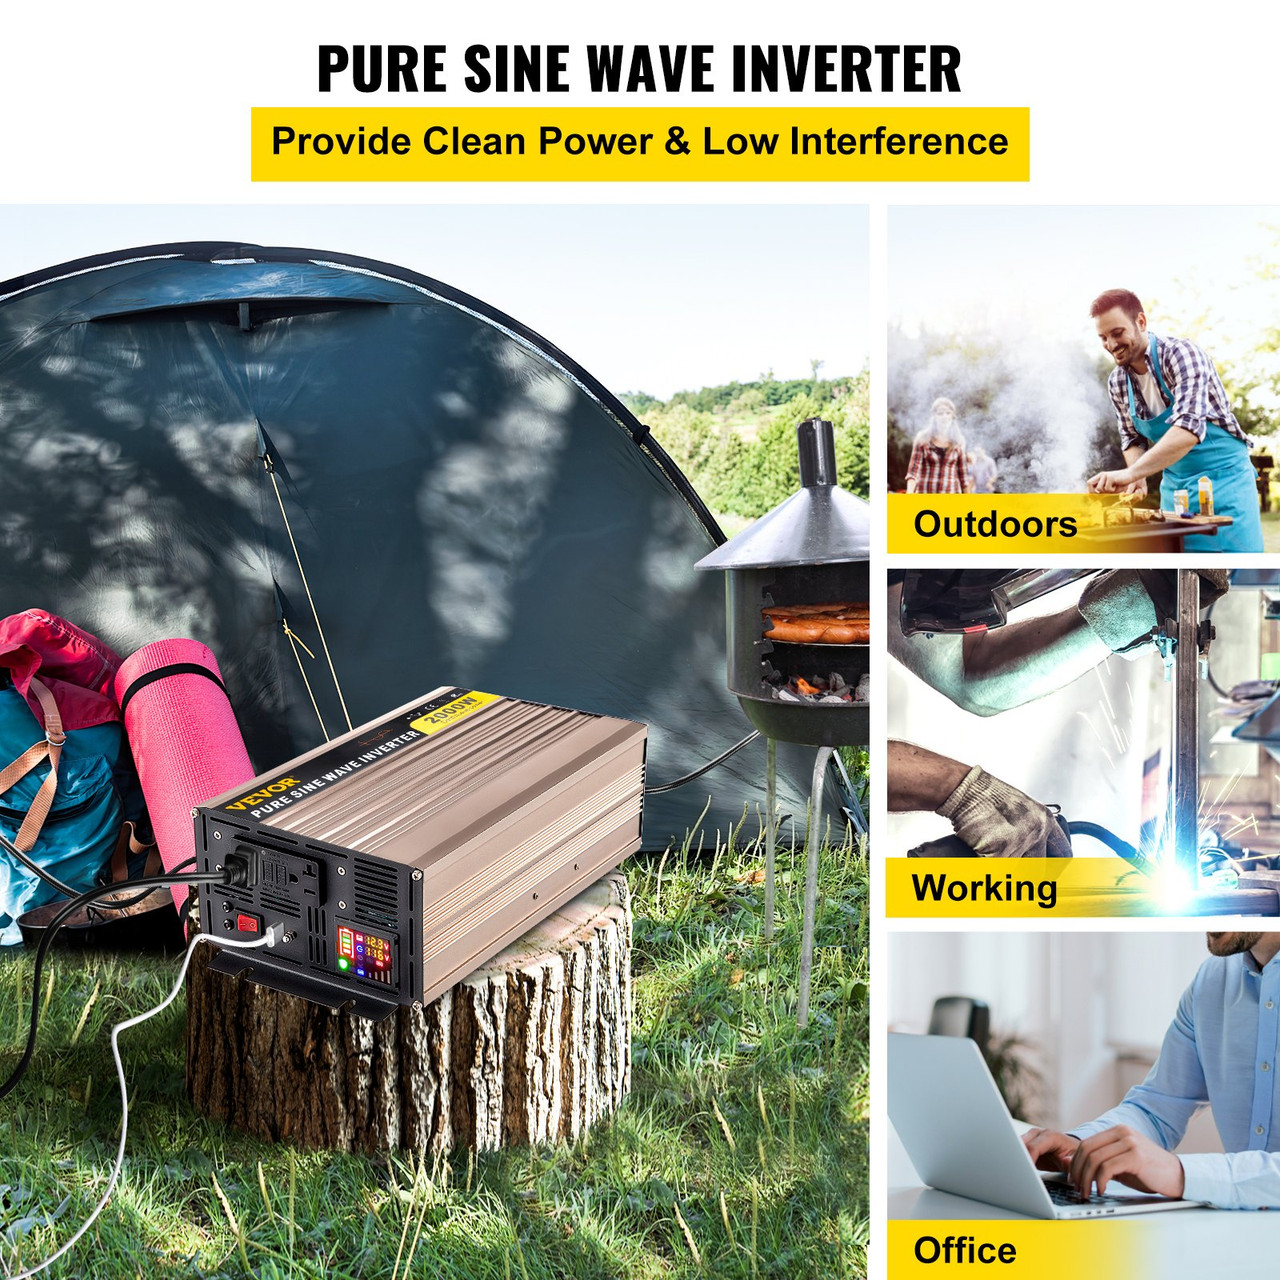 Pure Sine Wave Inverter, 2000 Watt Power Inverter, DC 12V to AC 110V Car Inverter, with LCD Display 5V USB Port AC Outlets (GFCI) Power Converter for Car, RV Truck, Solar System, Travel Camping